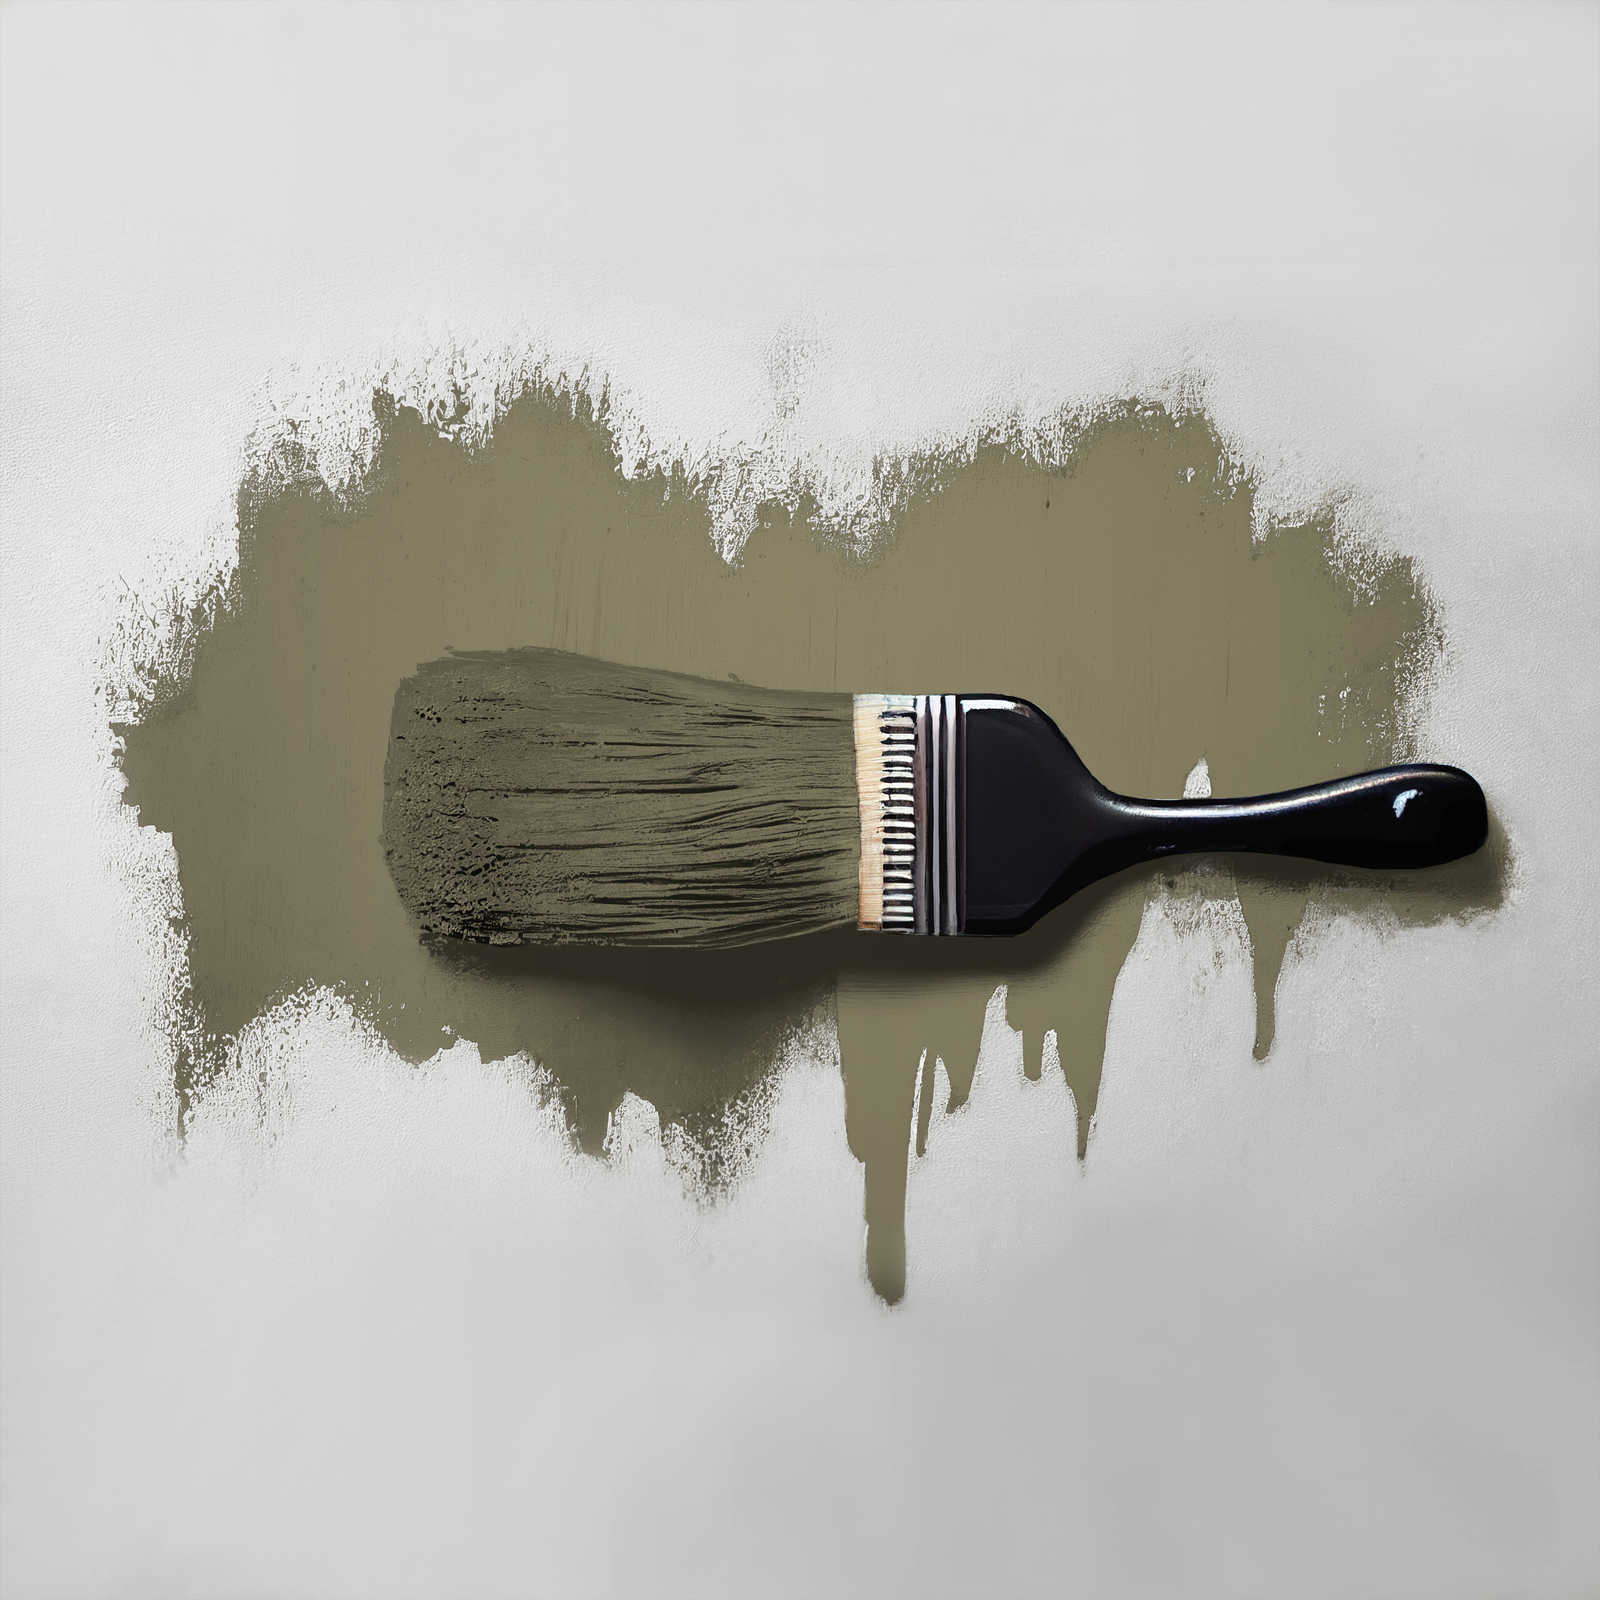             Pintura mural TCK4013 »Ordinary Olive« en tono oliva intenso – 5,0 litro
        